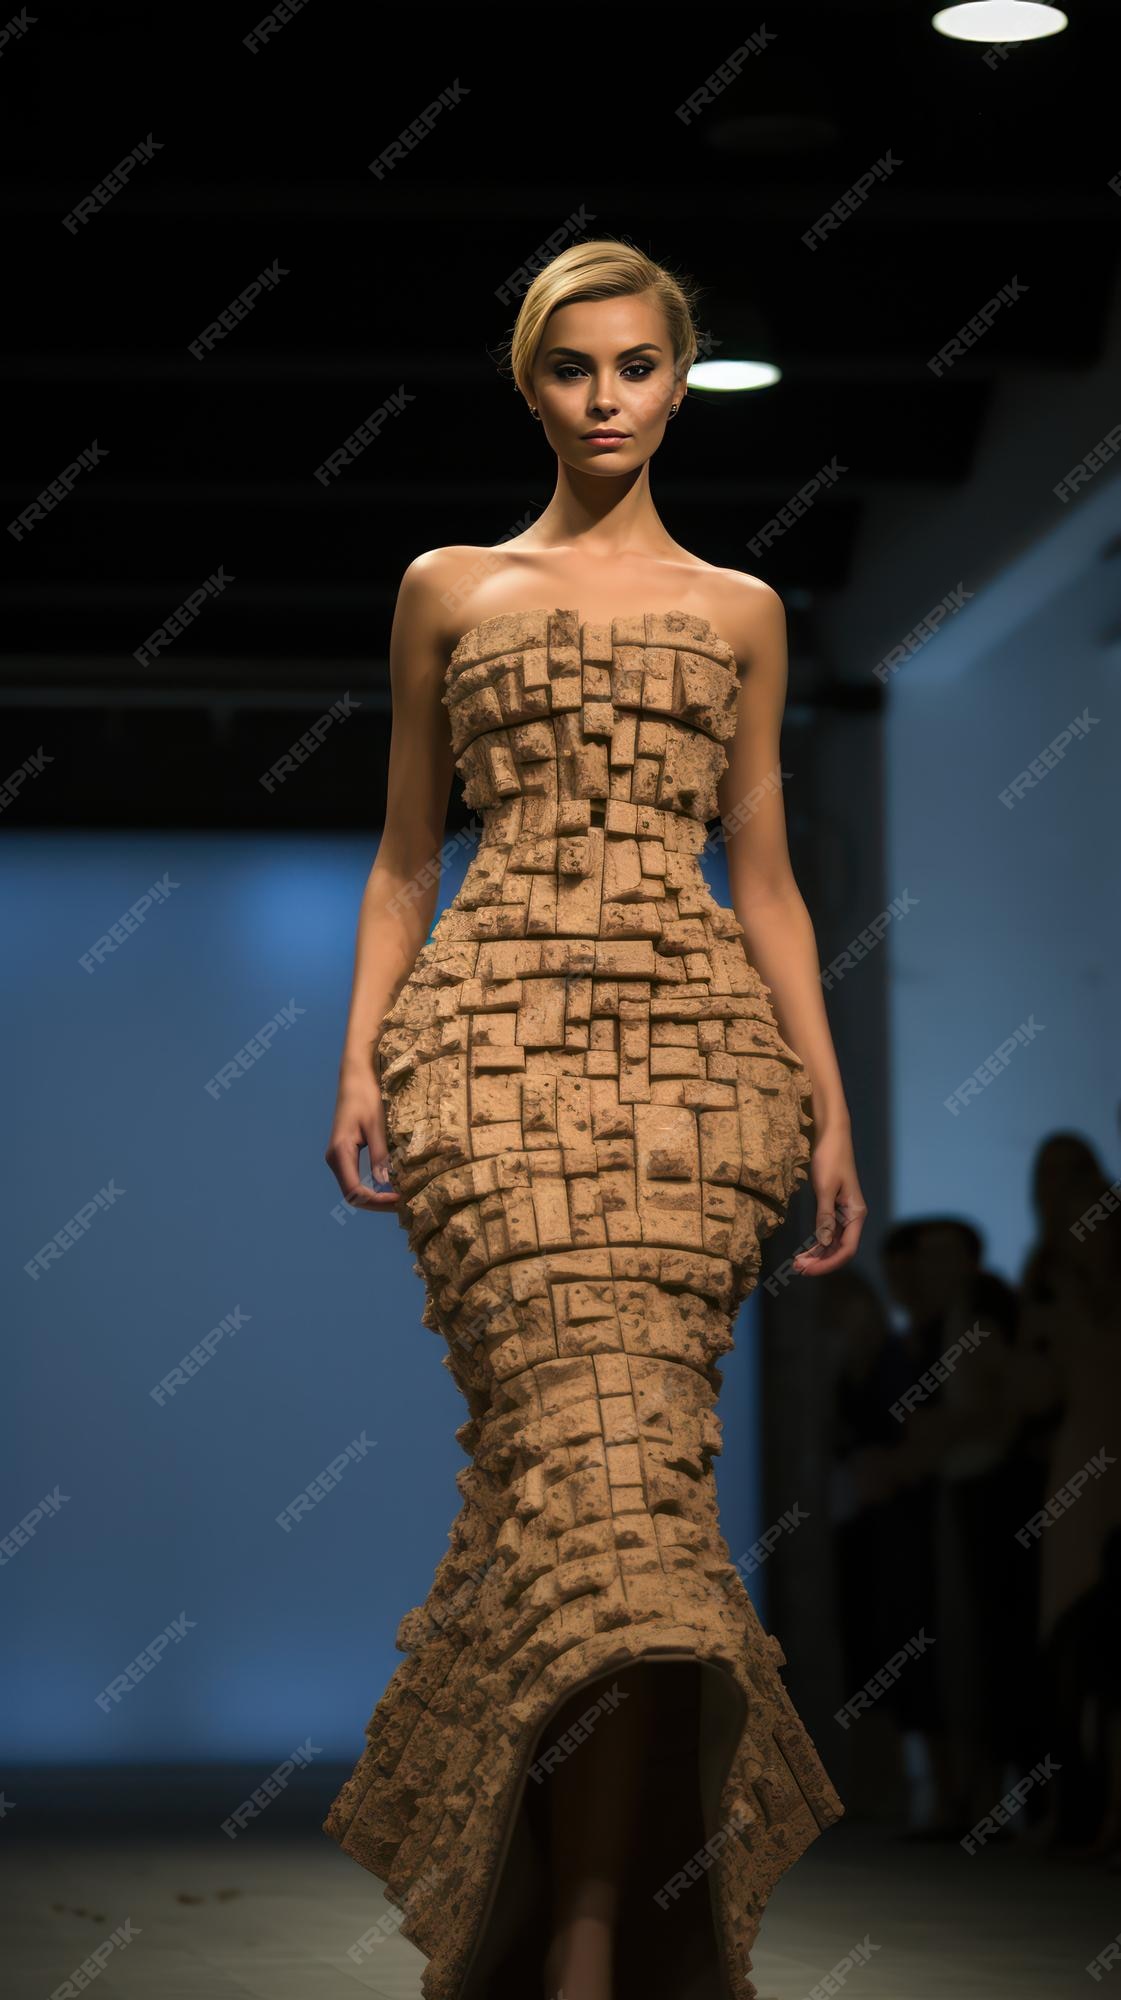 Premium AI Image | Woman Wearing Cork Dress at Italian Fashion Show